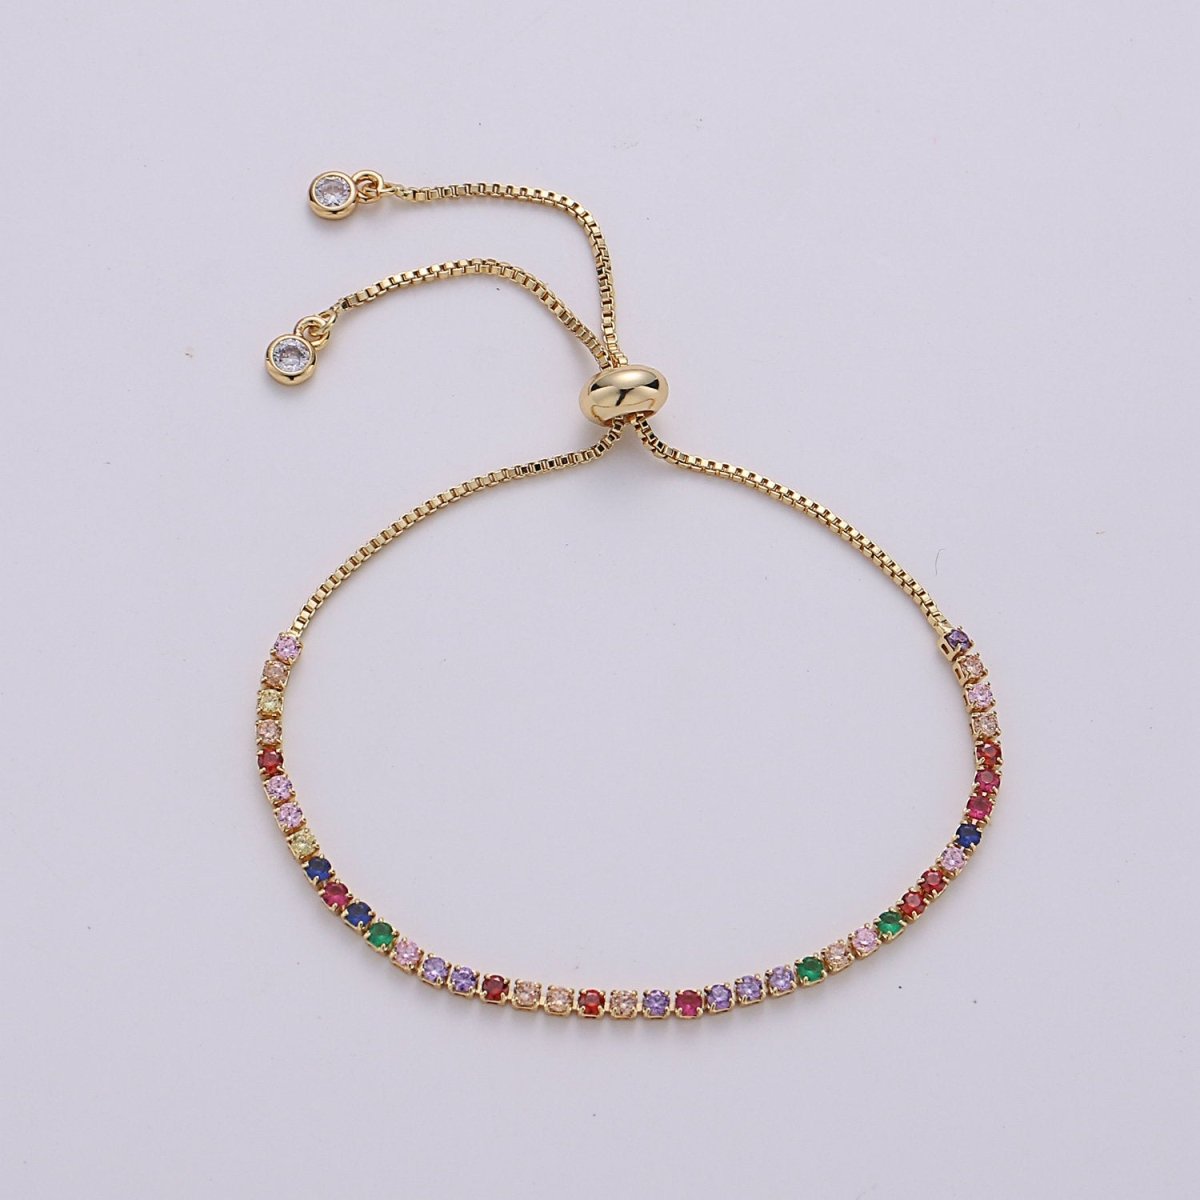 Micro Pave Adjustable Bracelet, Rainbow Clear CZ Cubic Bracelet Gold tennis bracelet in 14k Gold Filled Chain | K-546 K-547 - DLUXCA